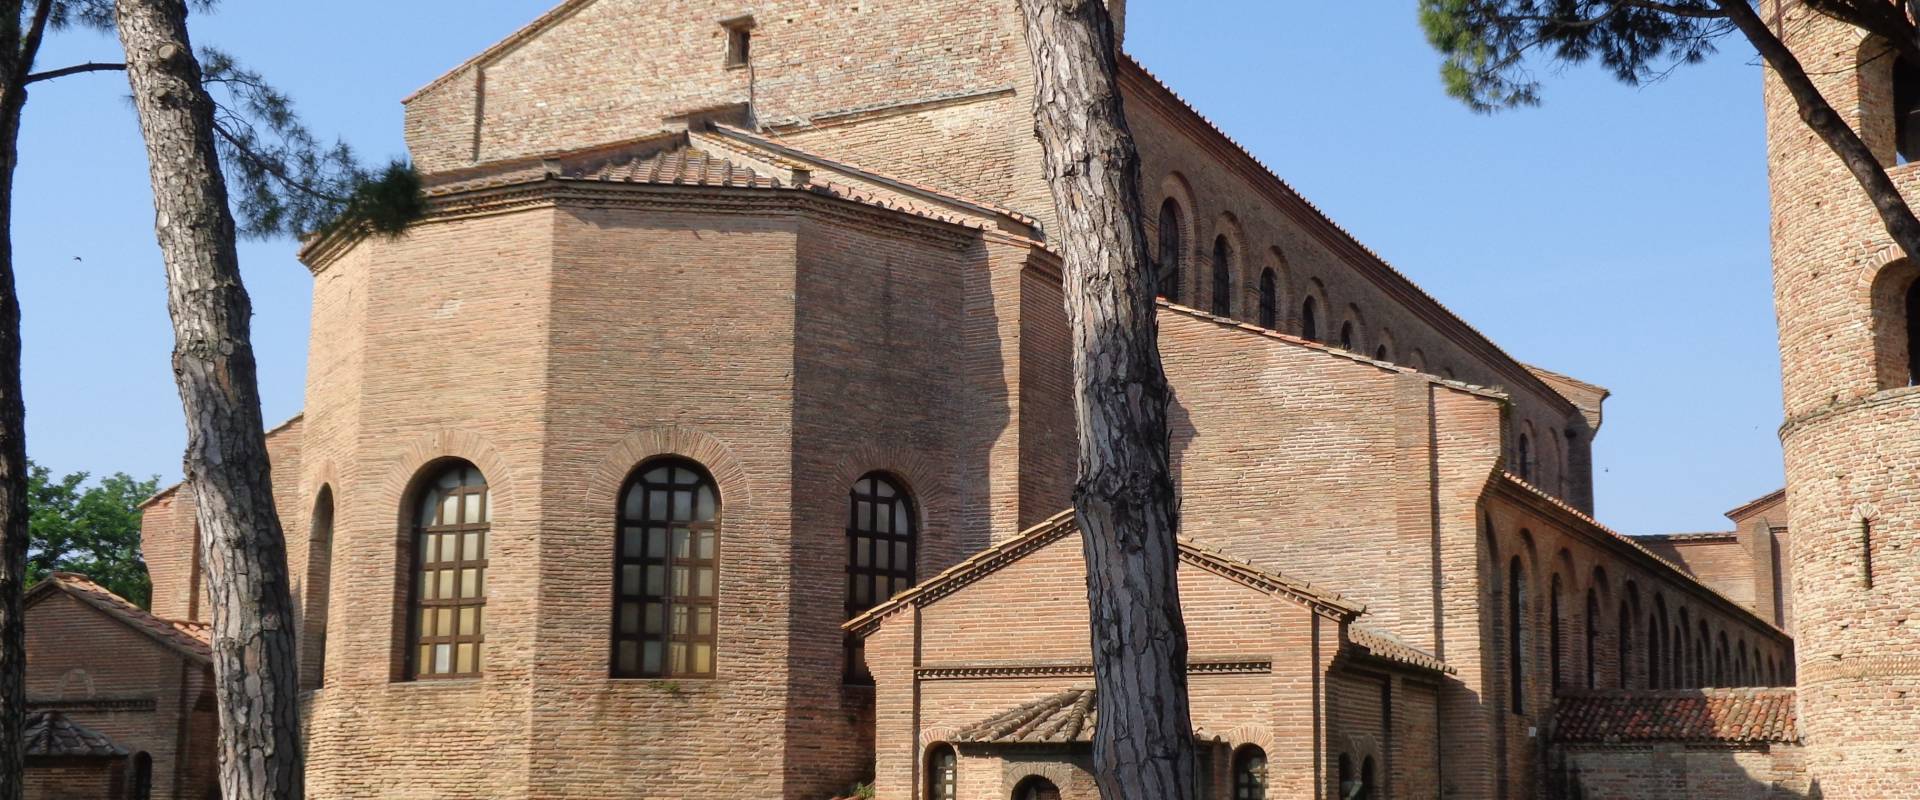 Sant'Apollinare in Classe Ravenna 03 photo by Superchilum